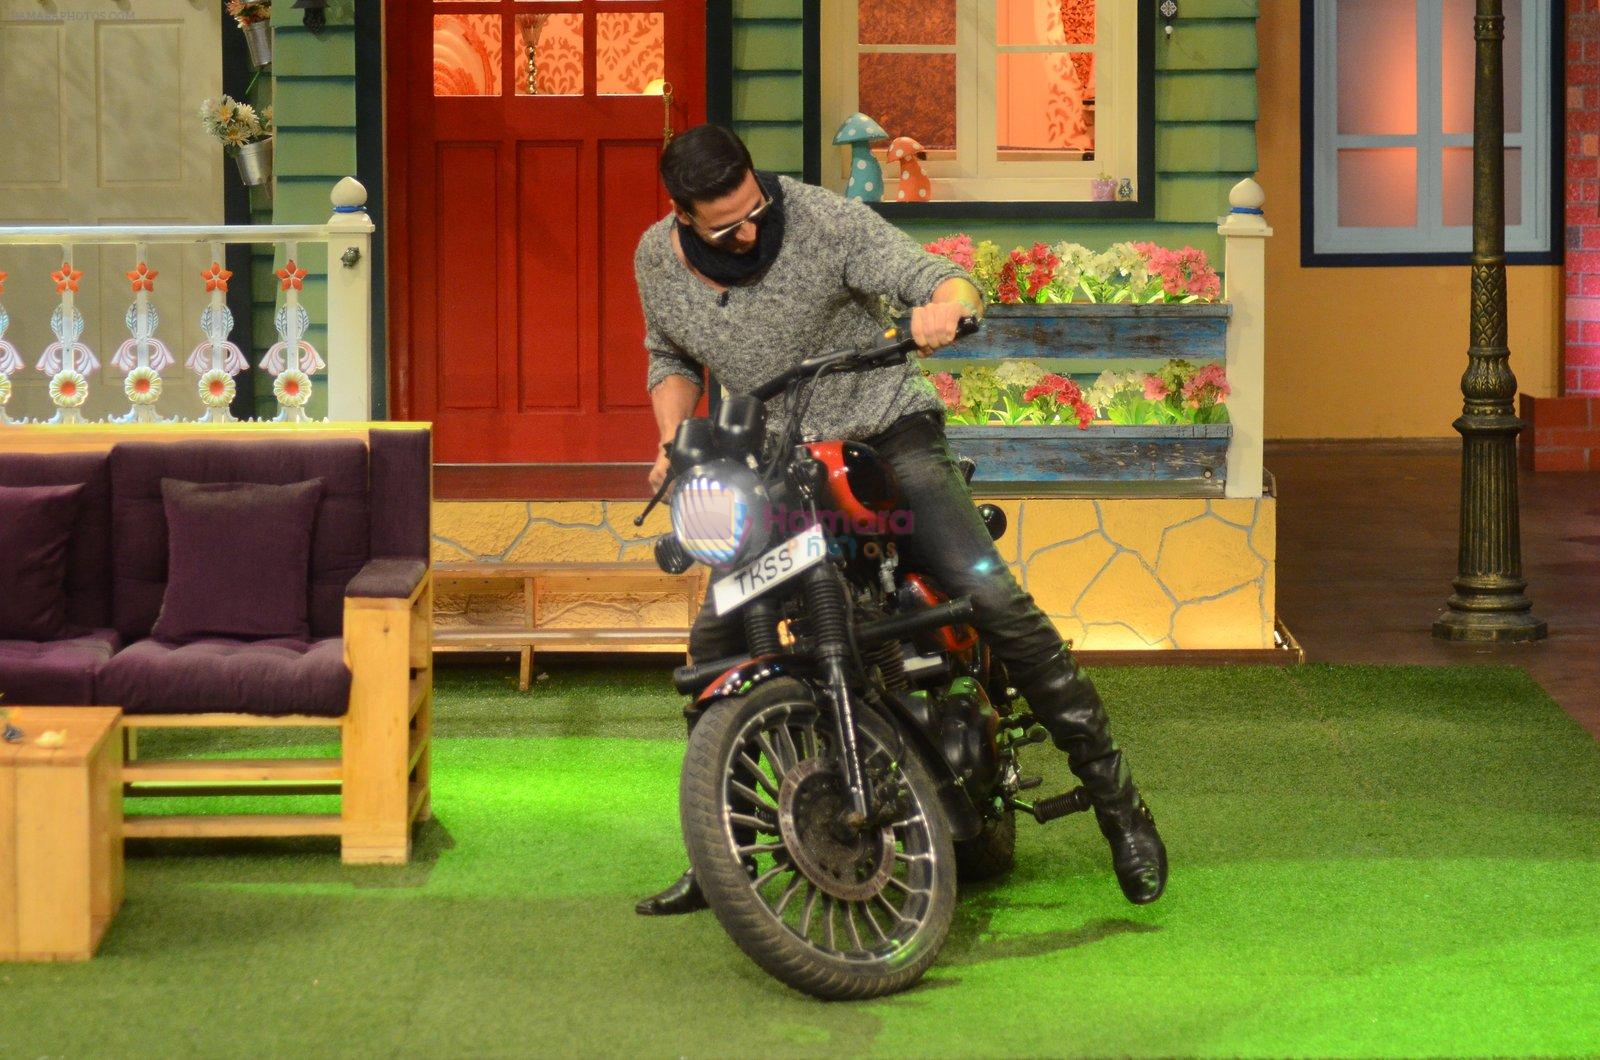 Akshay Kumar promote Rustom on the sets of The Kapil Sharma Show on 5th Aug 2016